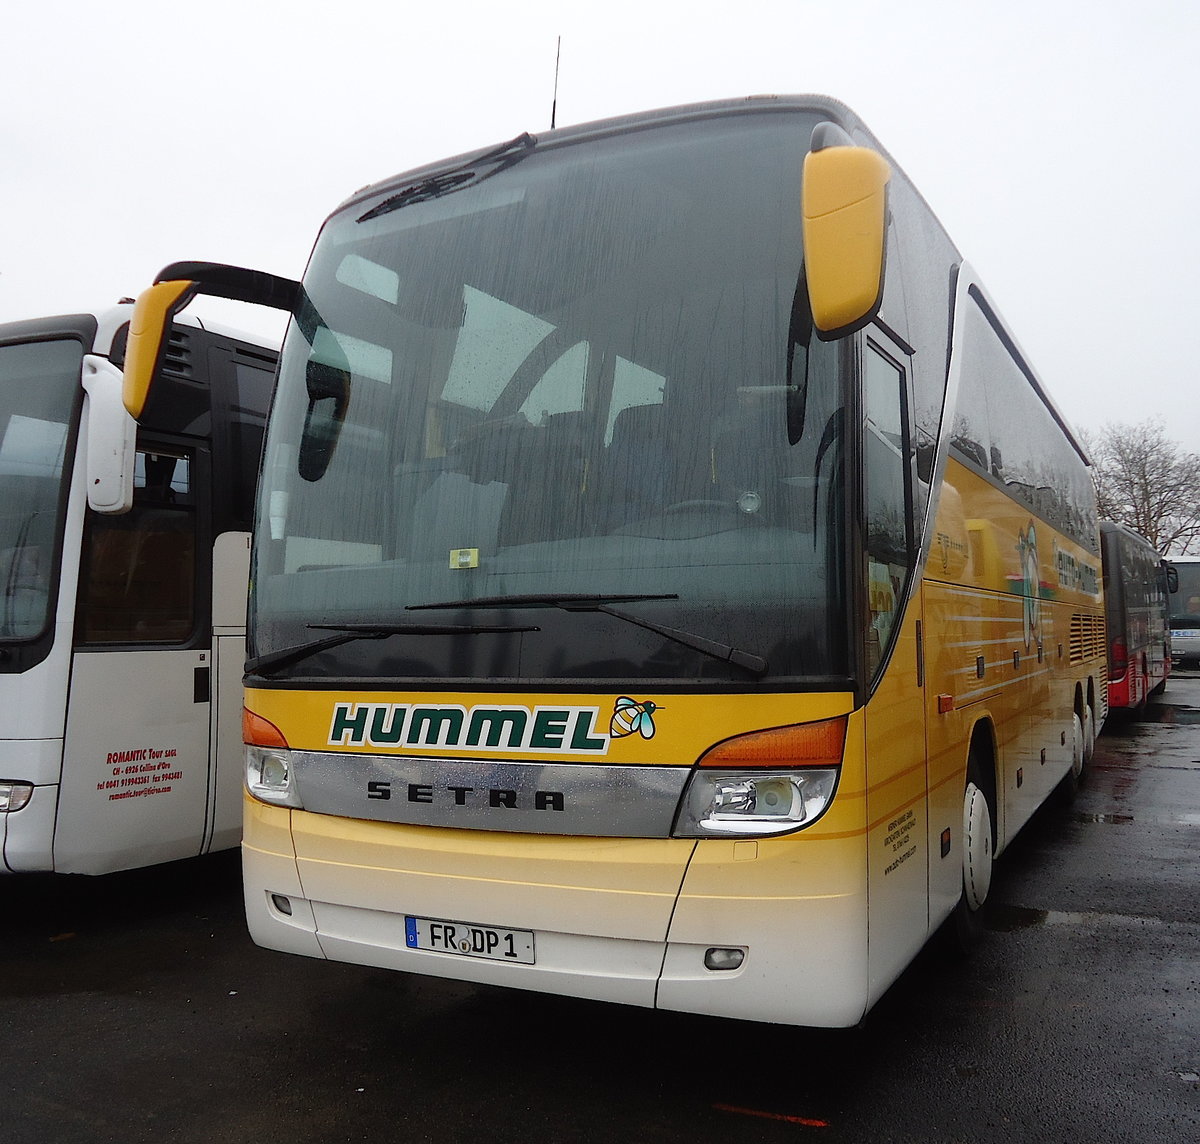 Setra 415 HDH Hummel Reisen, Berne novembre 2016